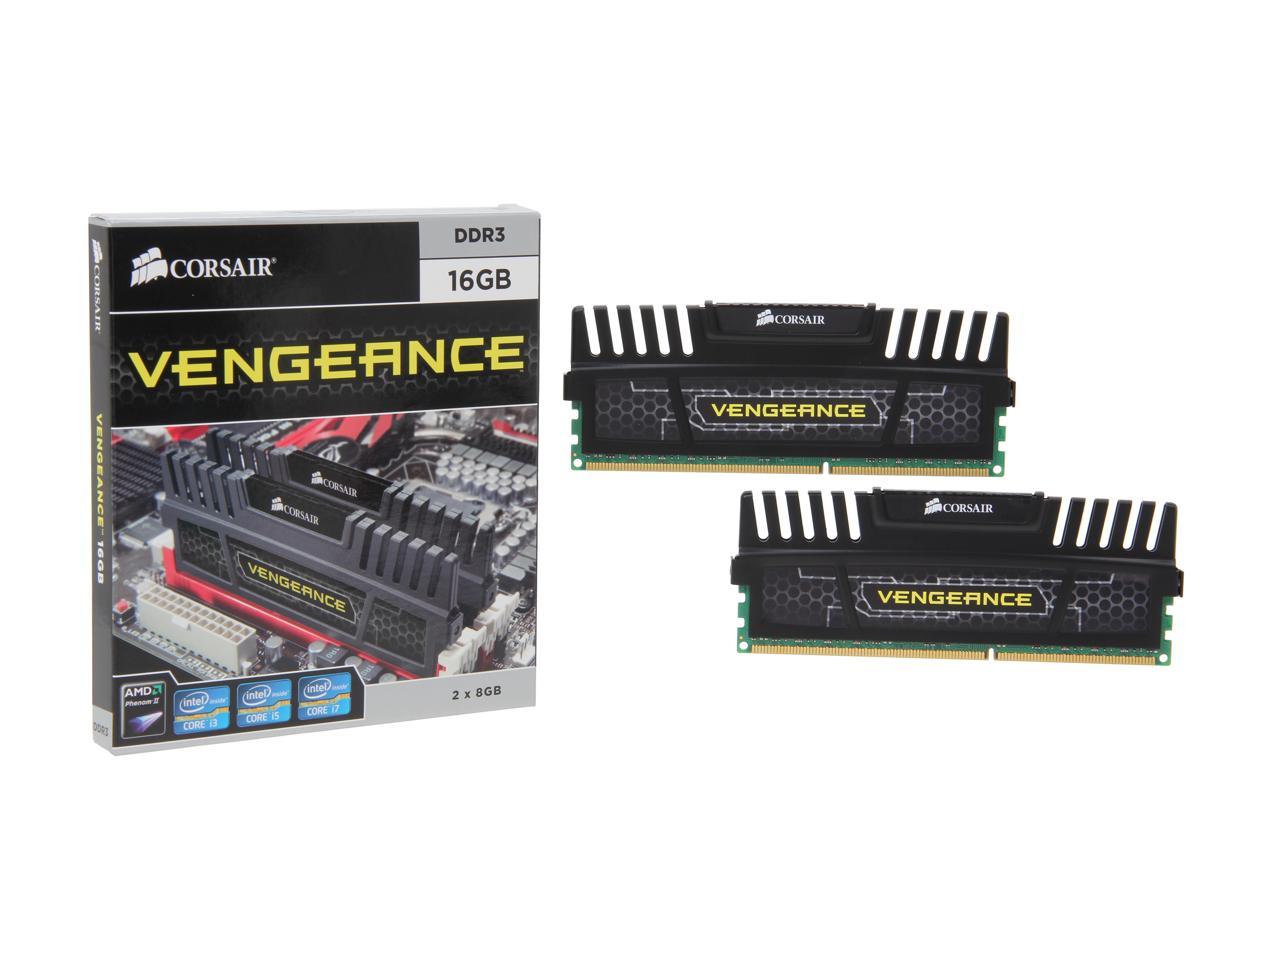 CORSAIR Vengeance 16GB (2 x 8GB) 240-Pin PC RAM DDR3